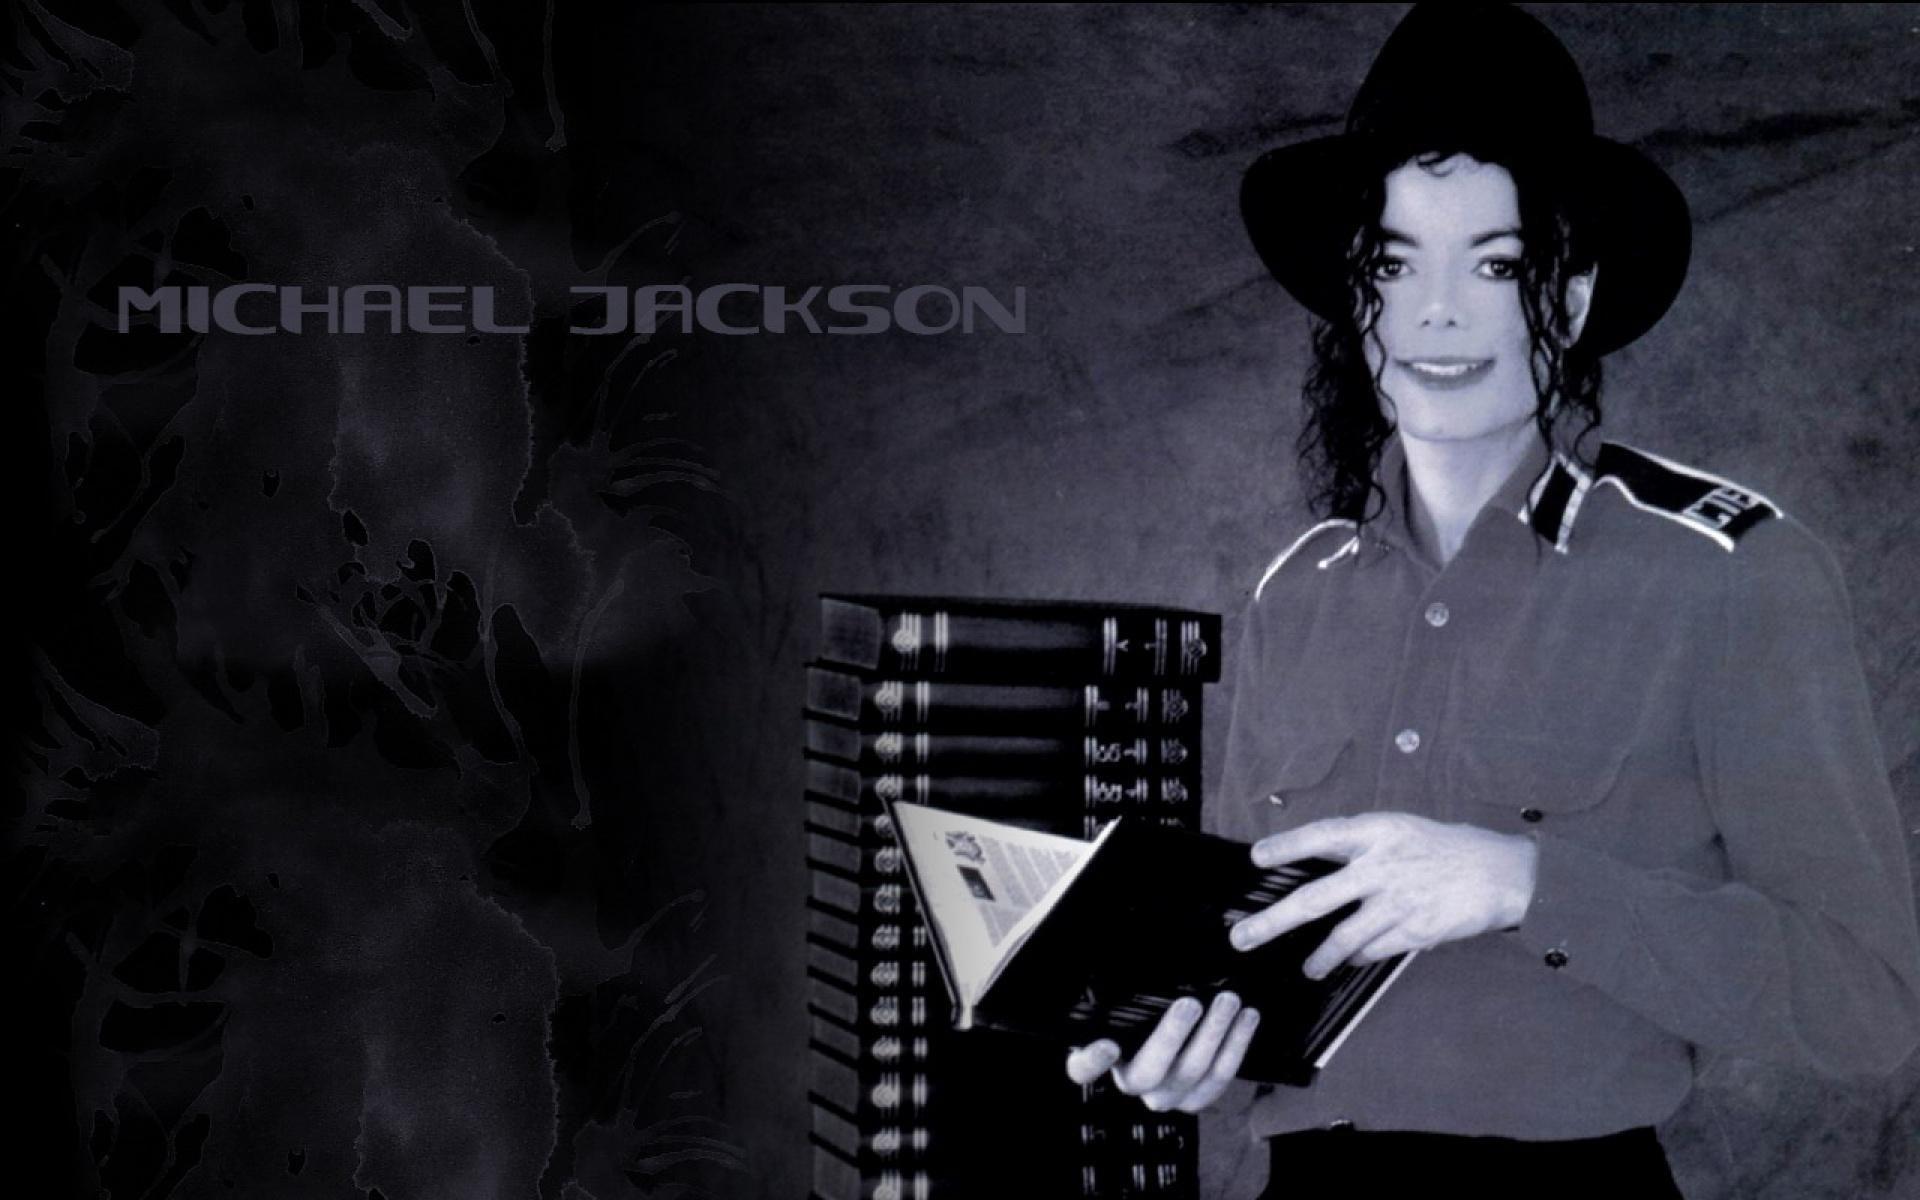 SMILE - Michael Jackson Wallpaper (12326842) - Fanpop